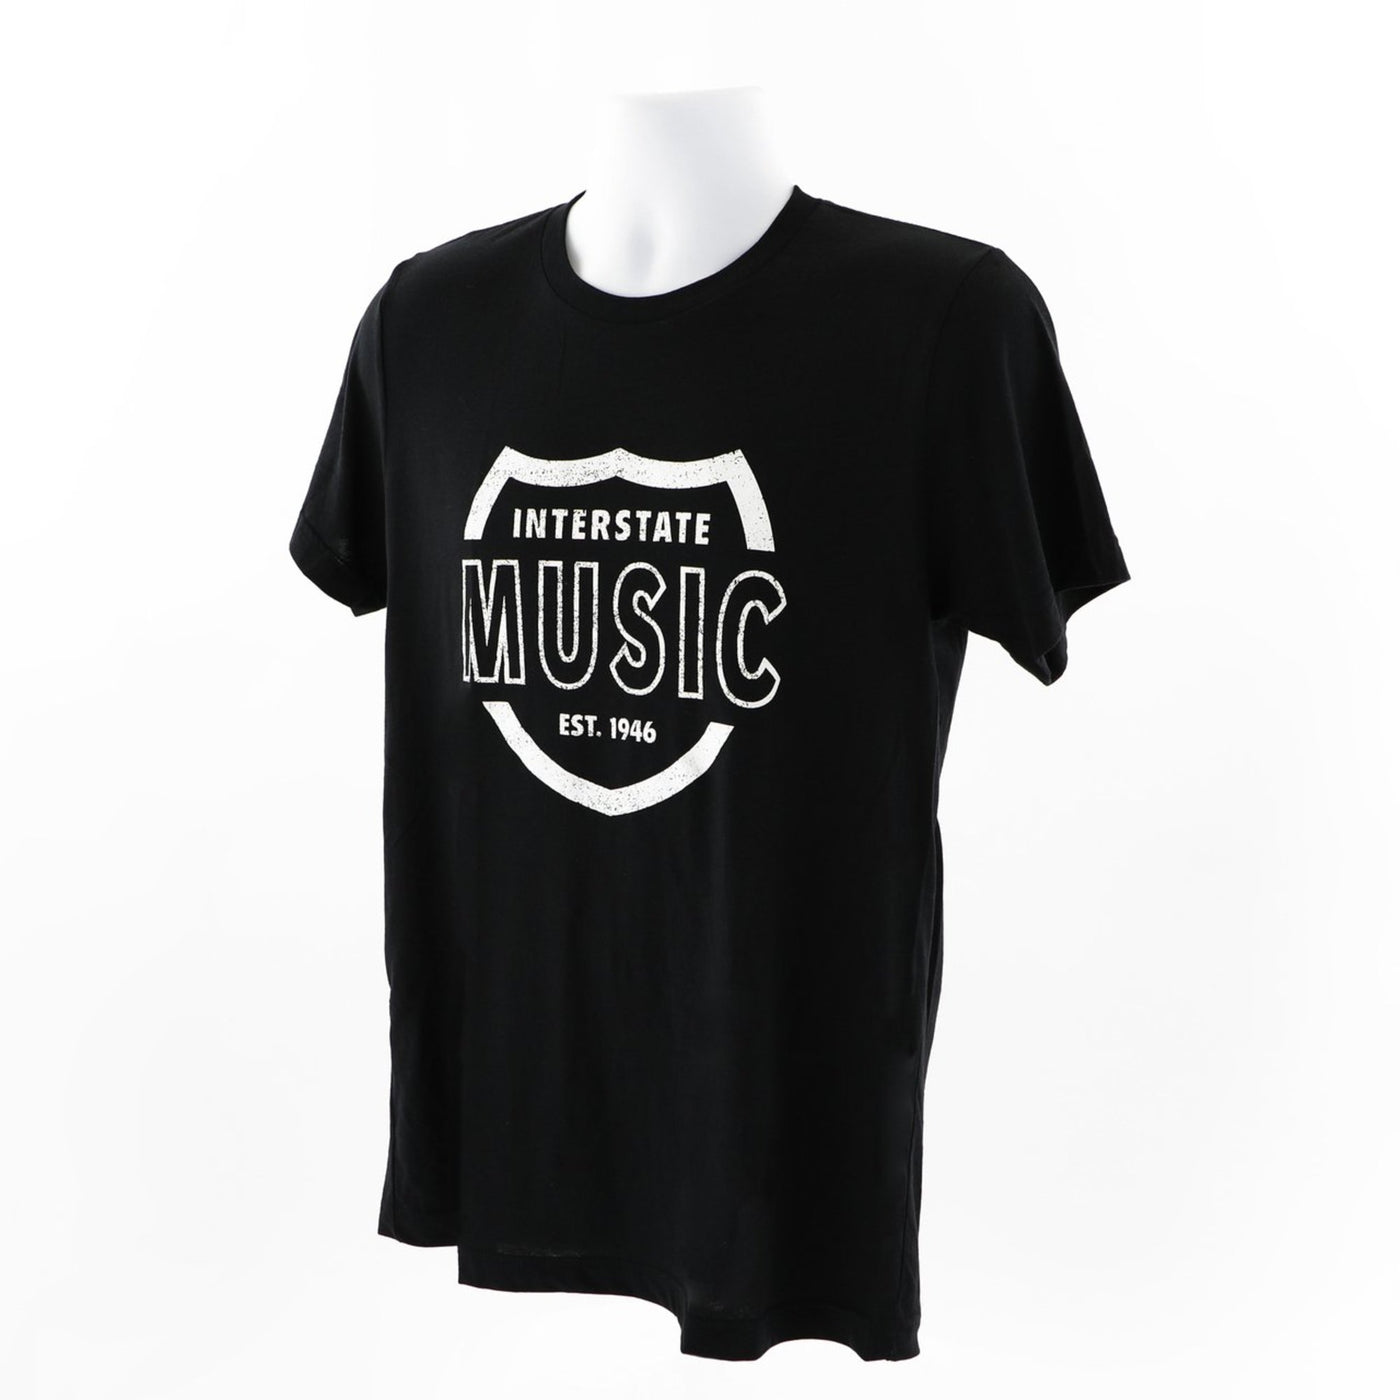 Interstate Music Short Sleeve T-Shirt - Unisex, Black, Small